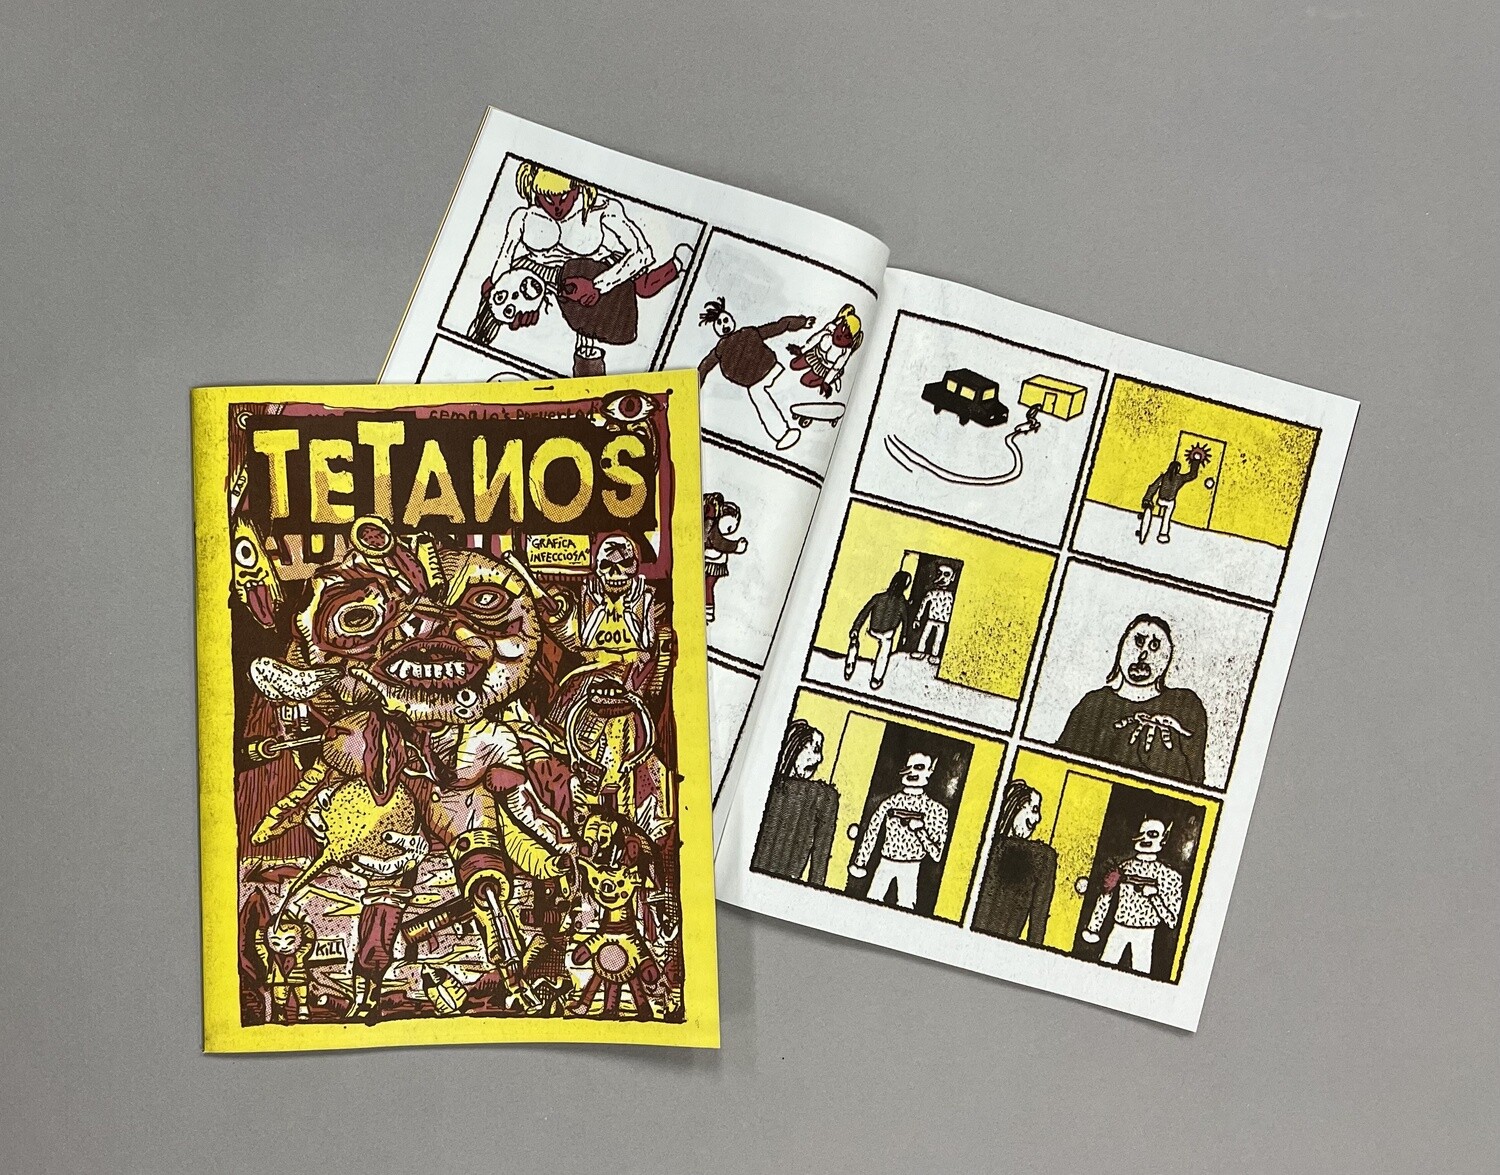 Tetanos #5 - Anthology by Abraham Diaz